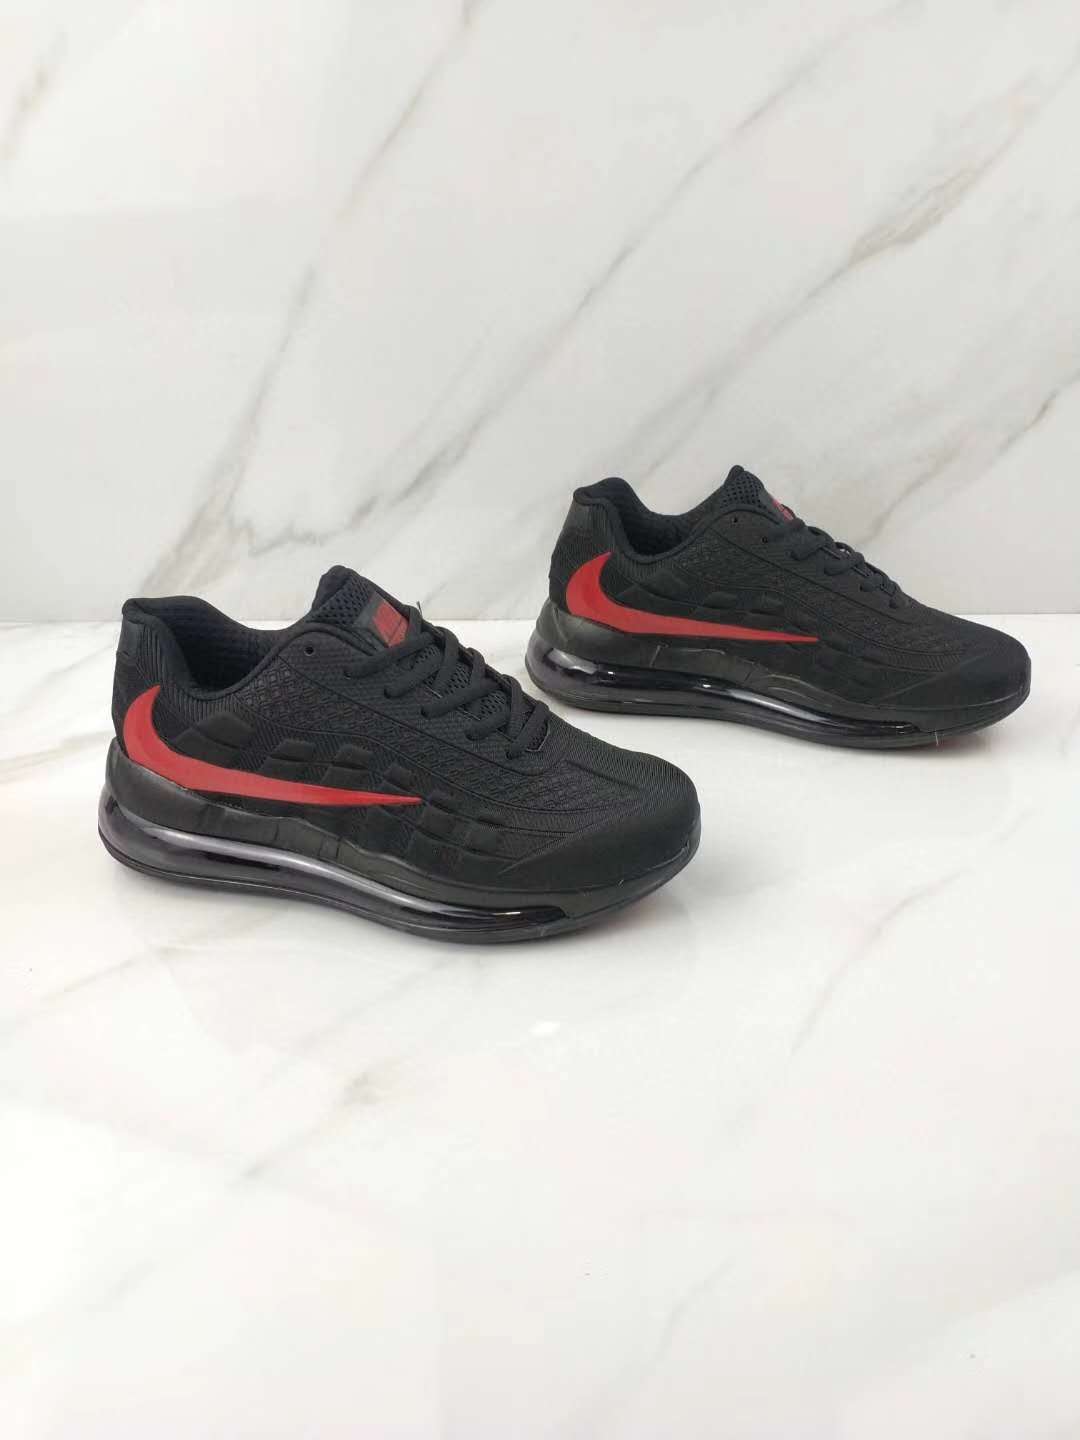 Nike Air Max 95+720 Black Red Shoes